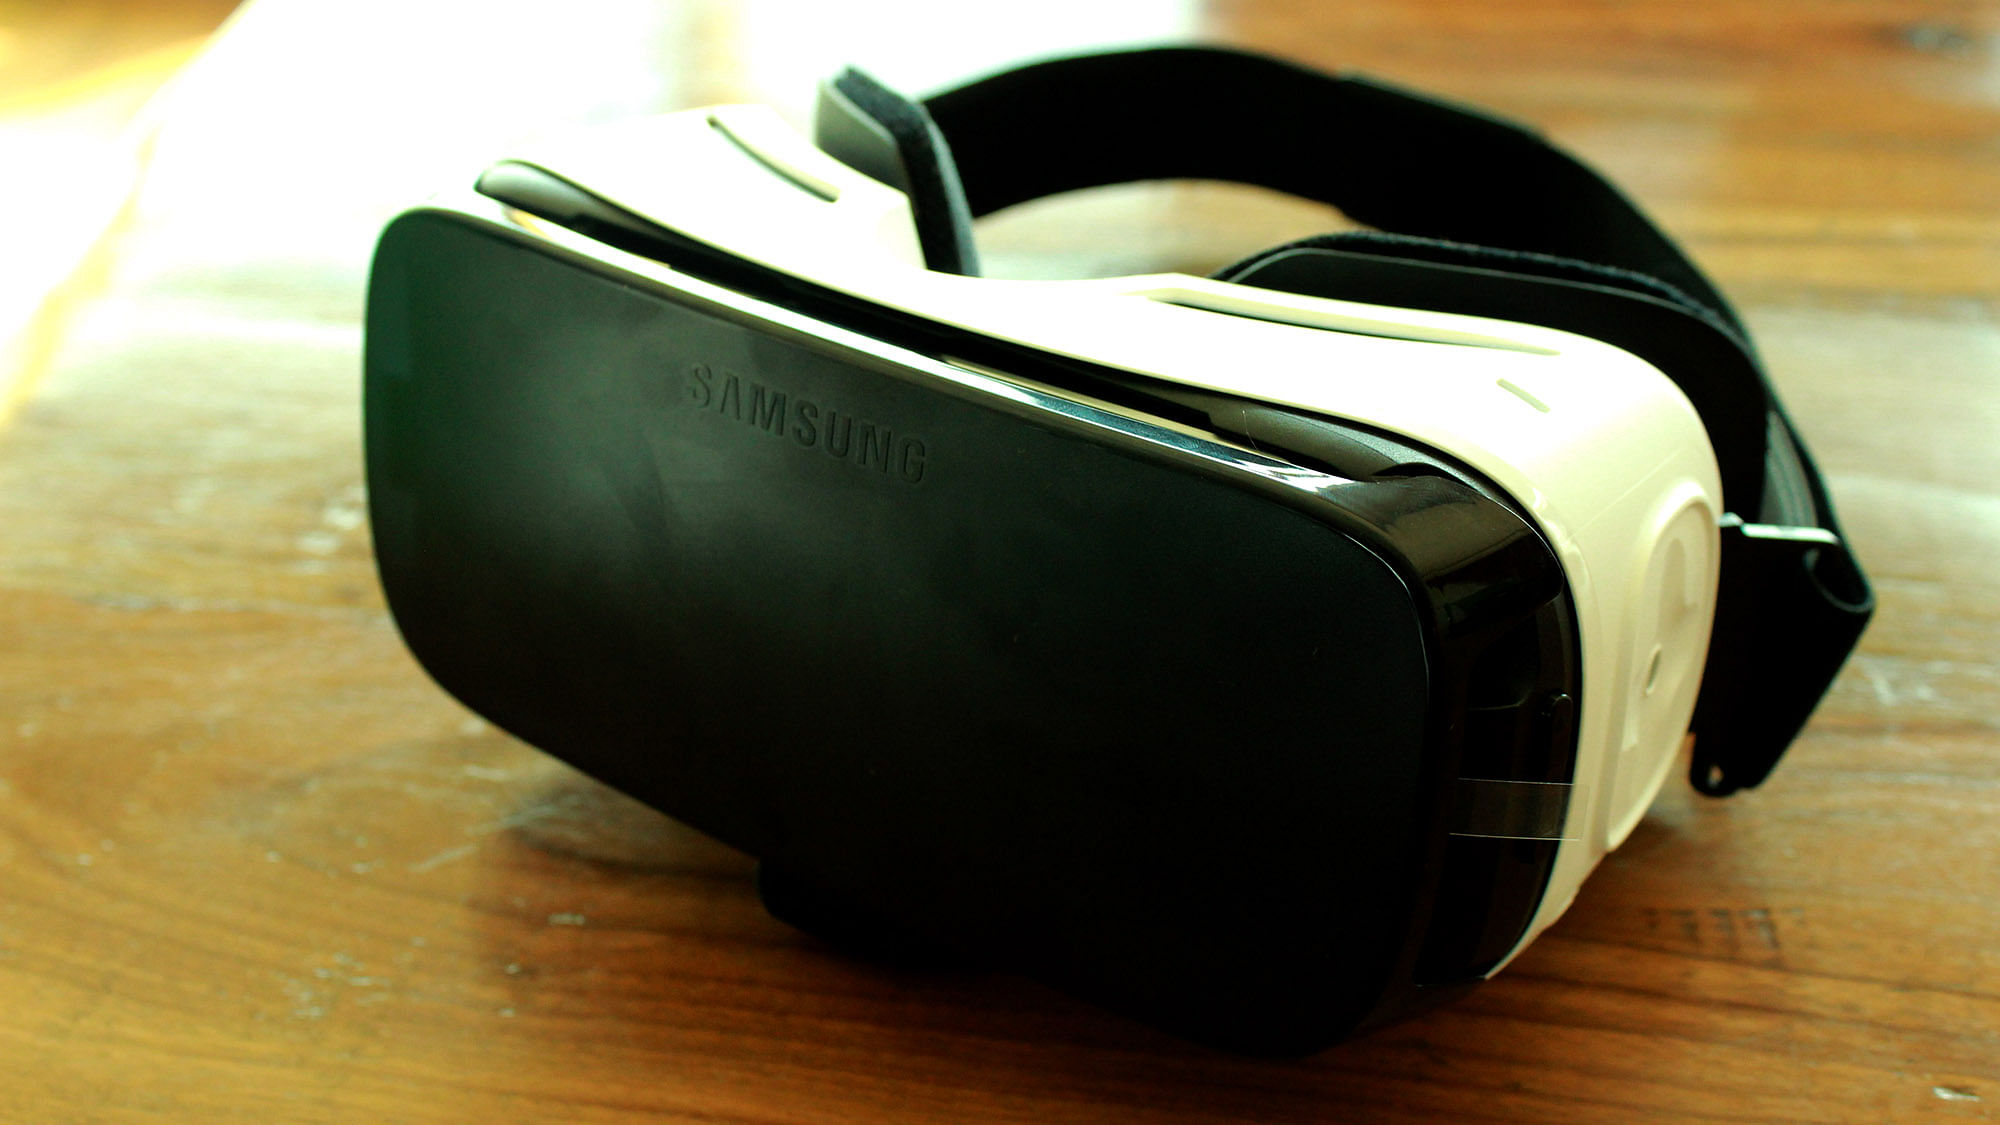 Samsung Gear VR headset. (Photo: <b>The Quint</b>)